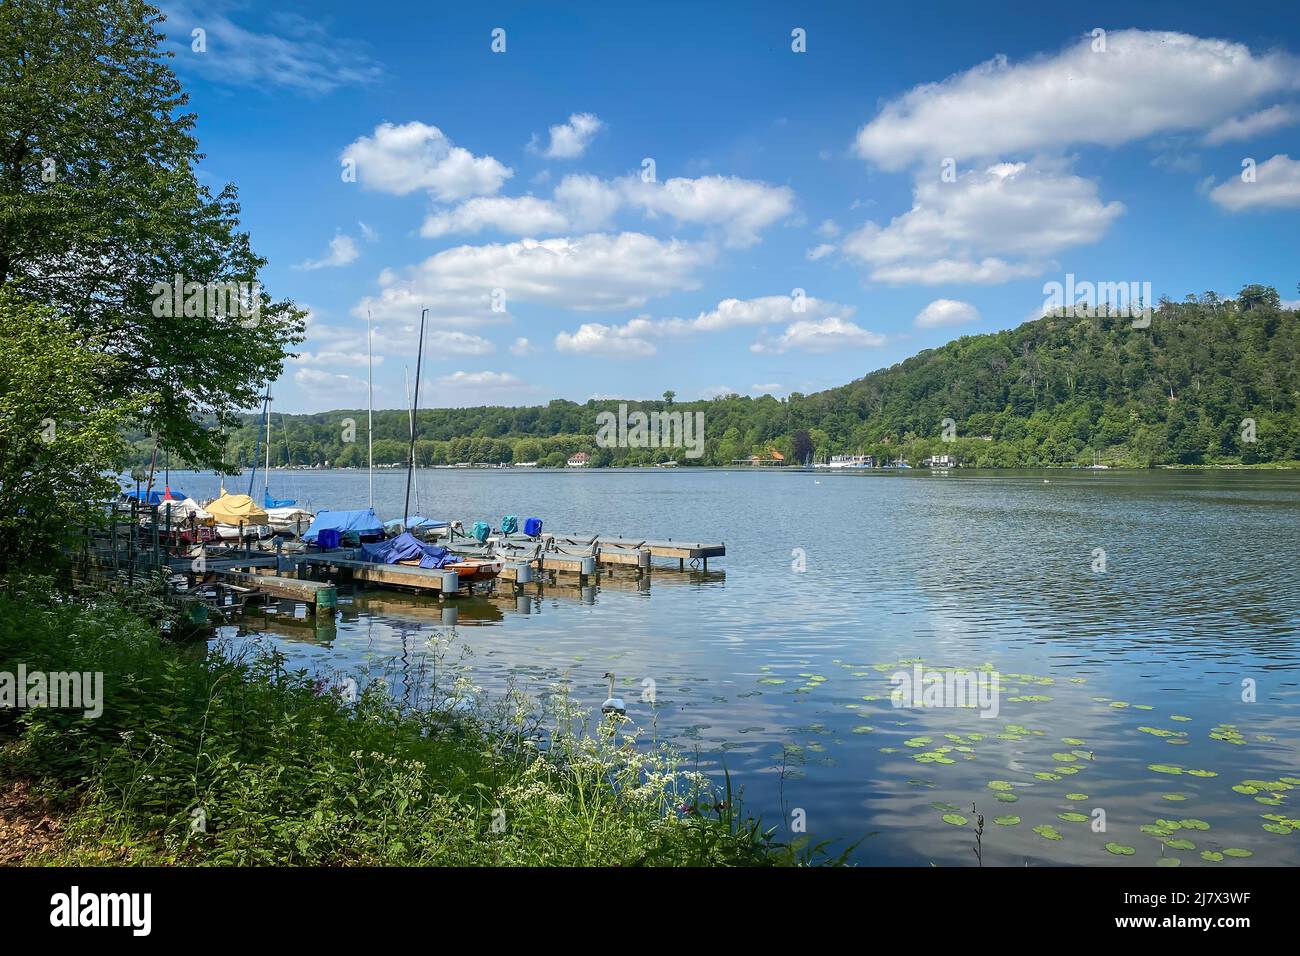 Boats on Lake Baldeney Baldeneysee near Essen, Germany against blue sky Stock Photo